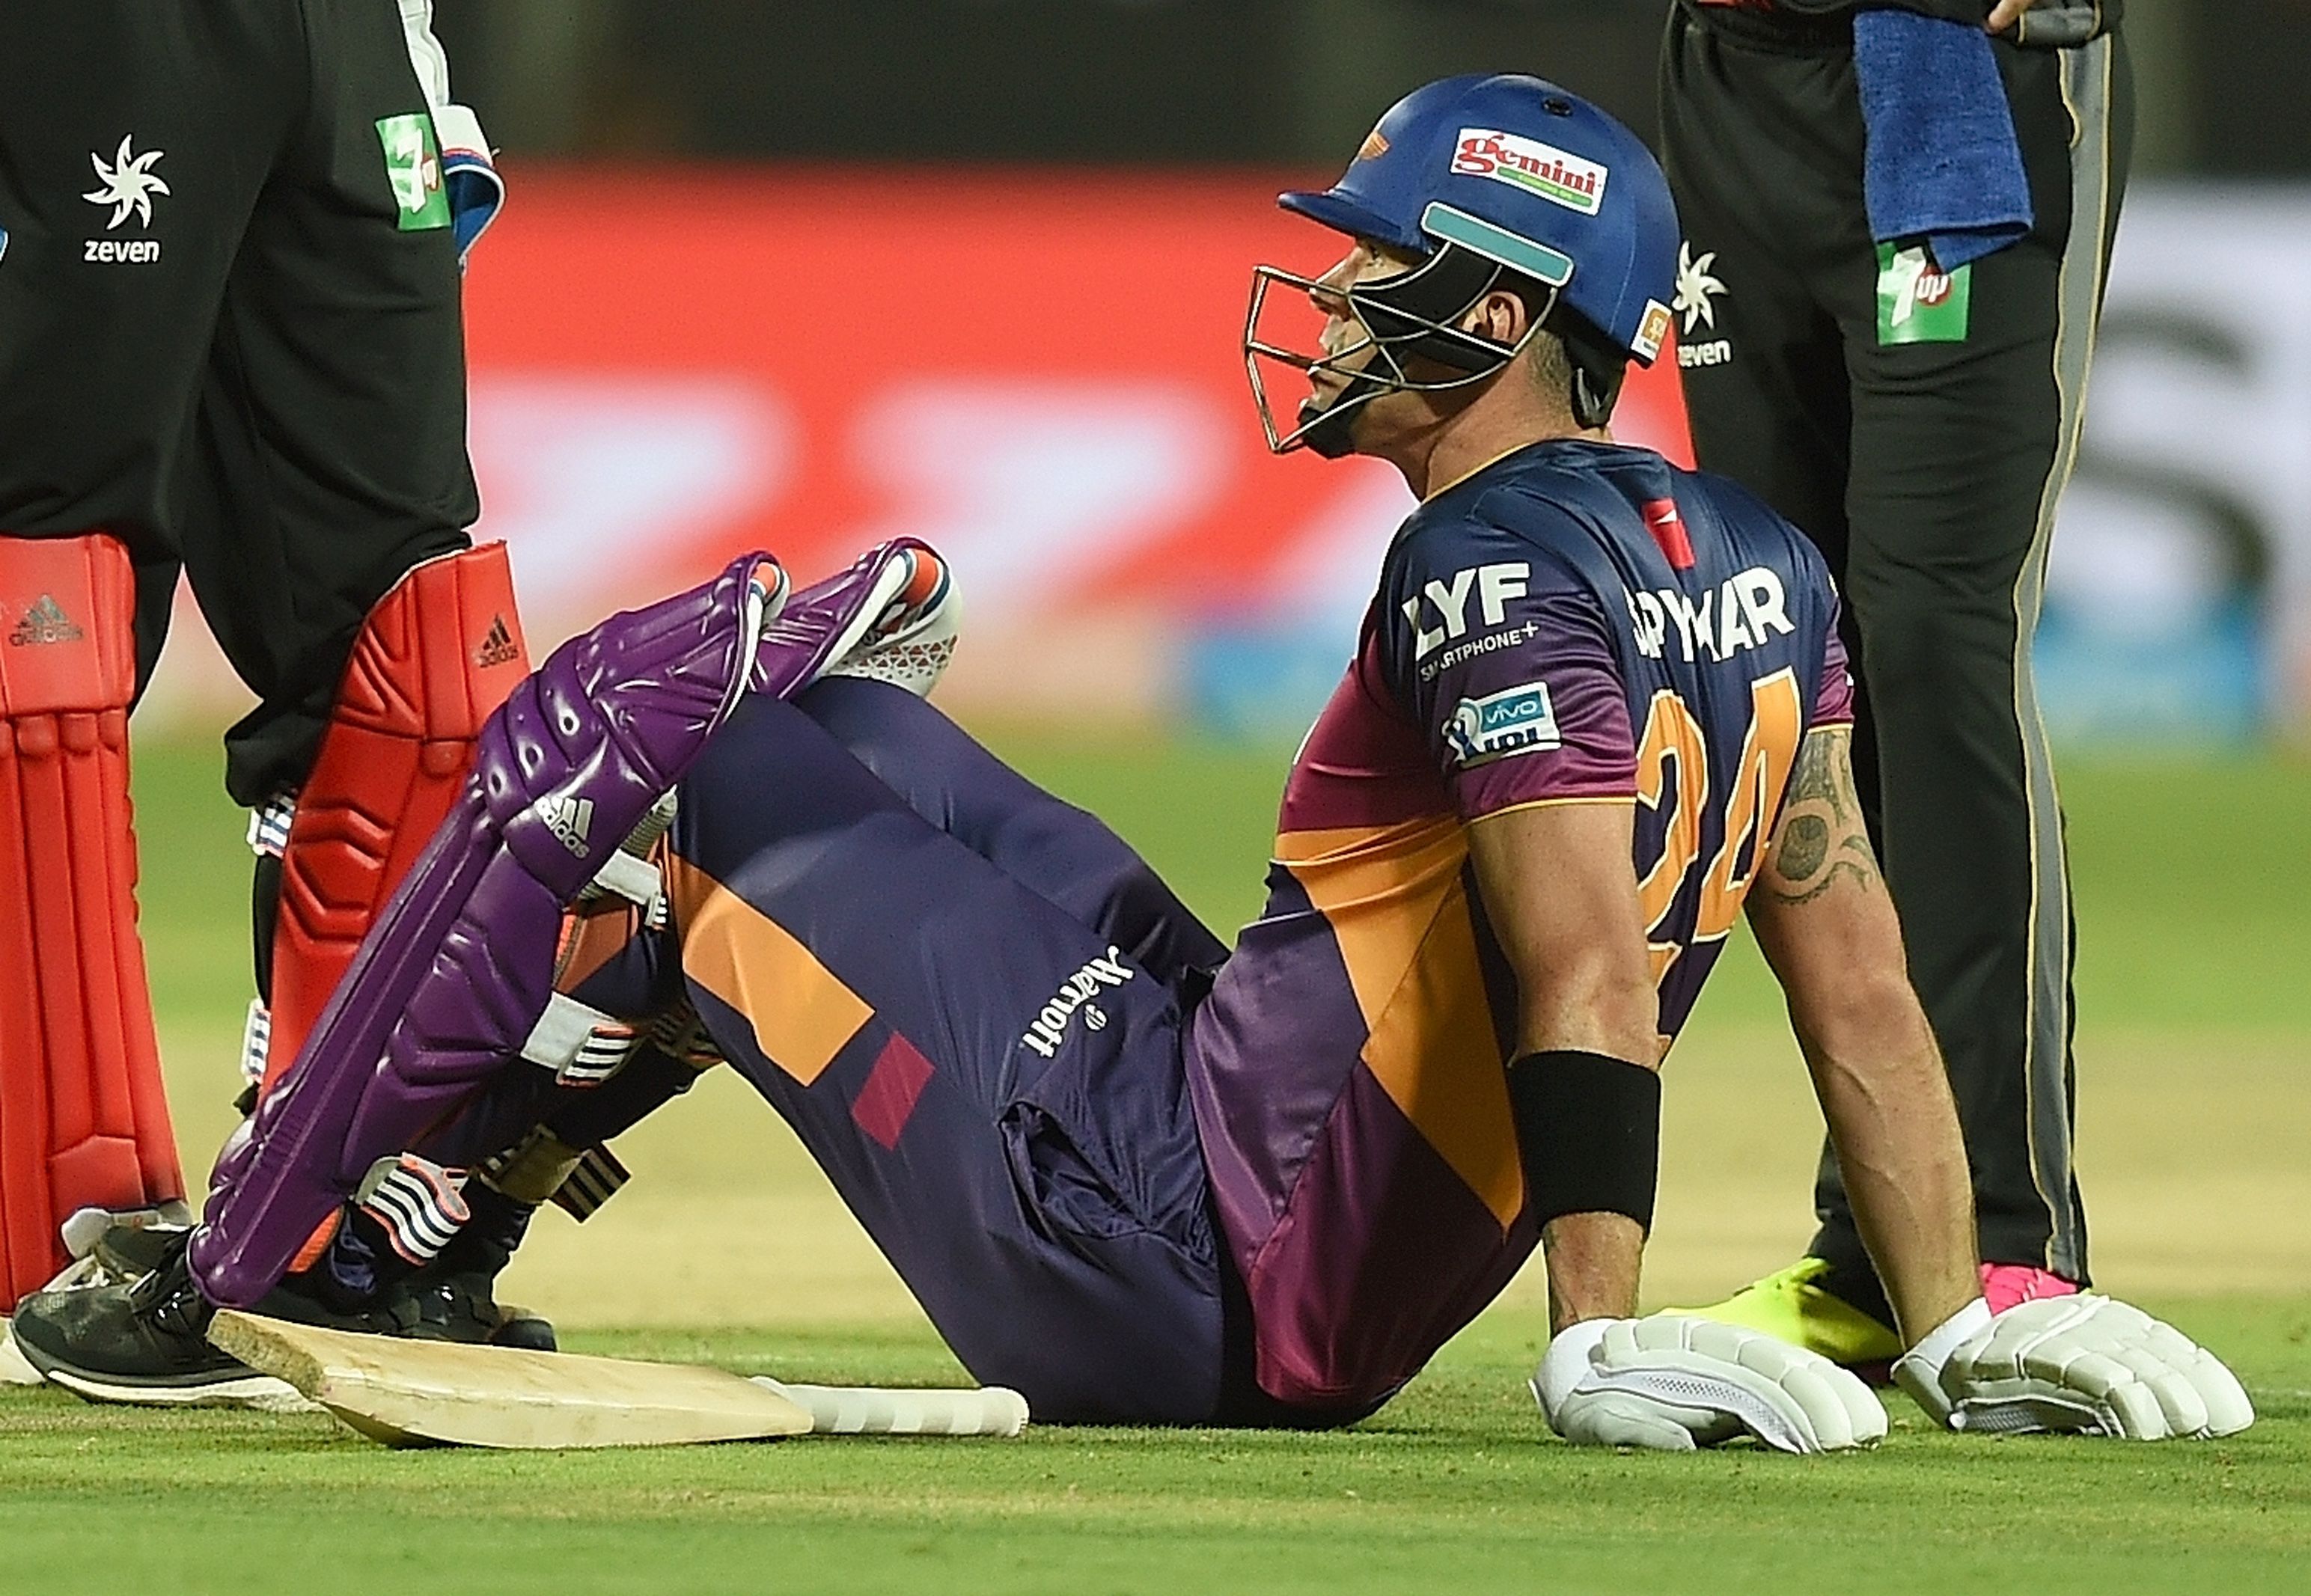 Calf injury ends Pietersen's IPL stint